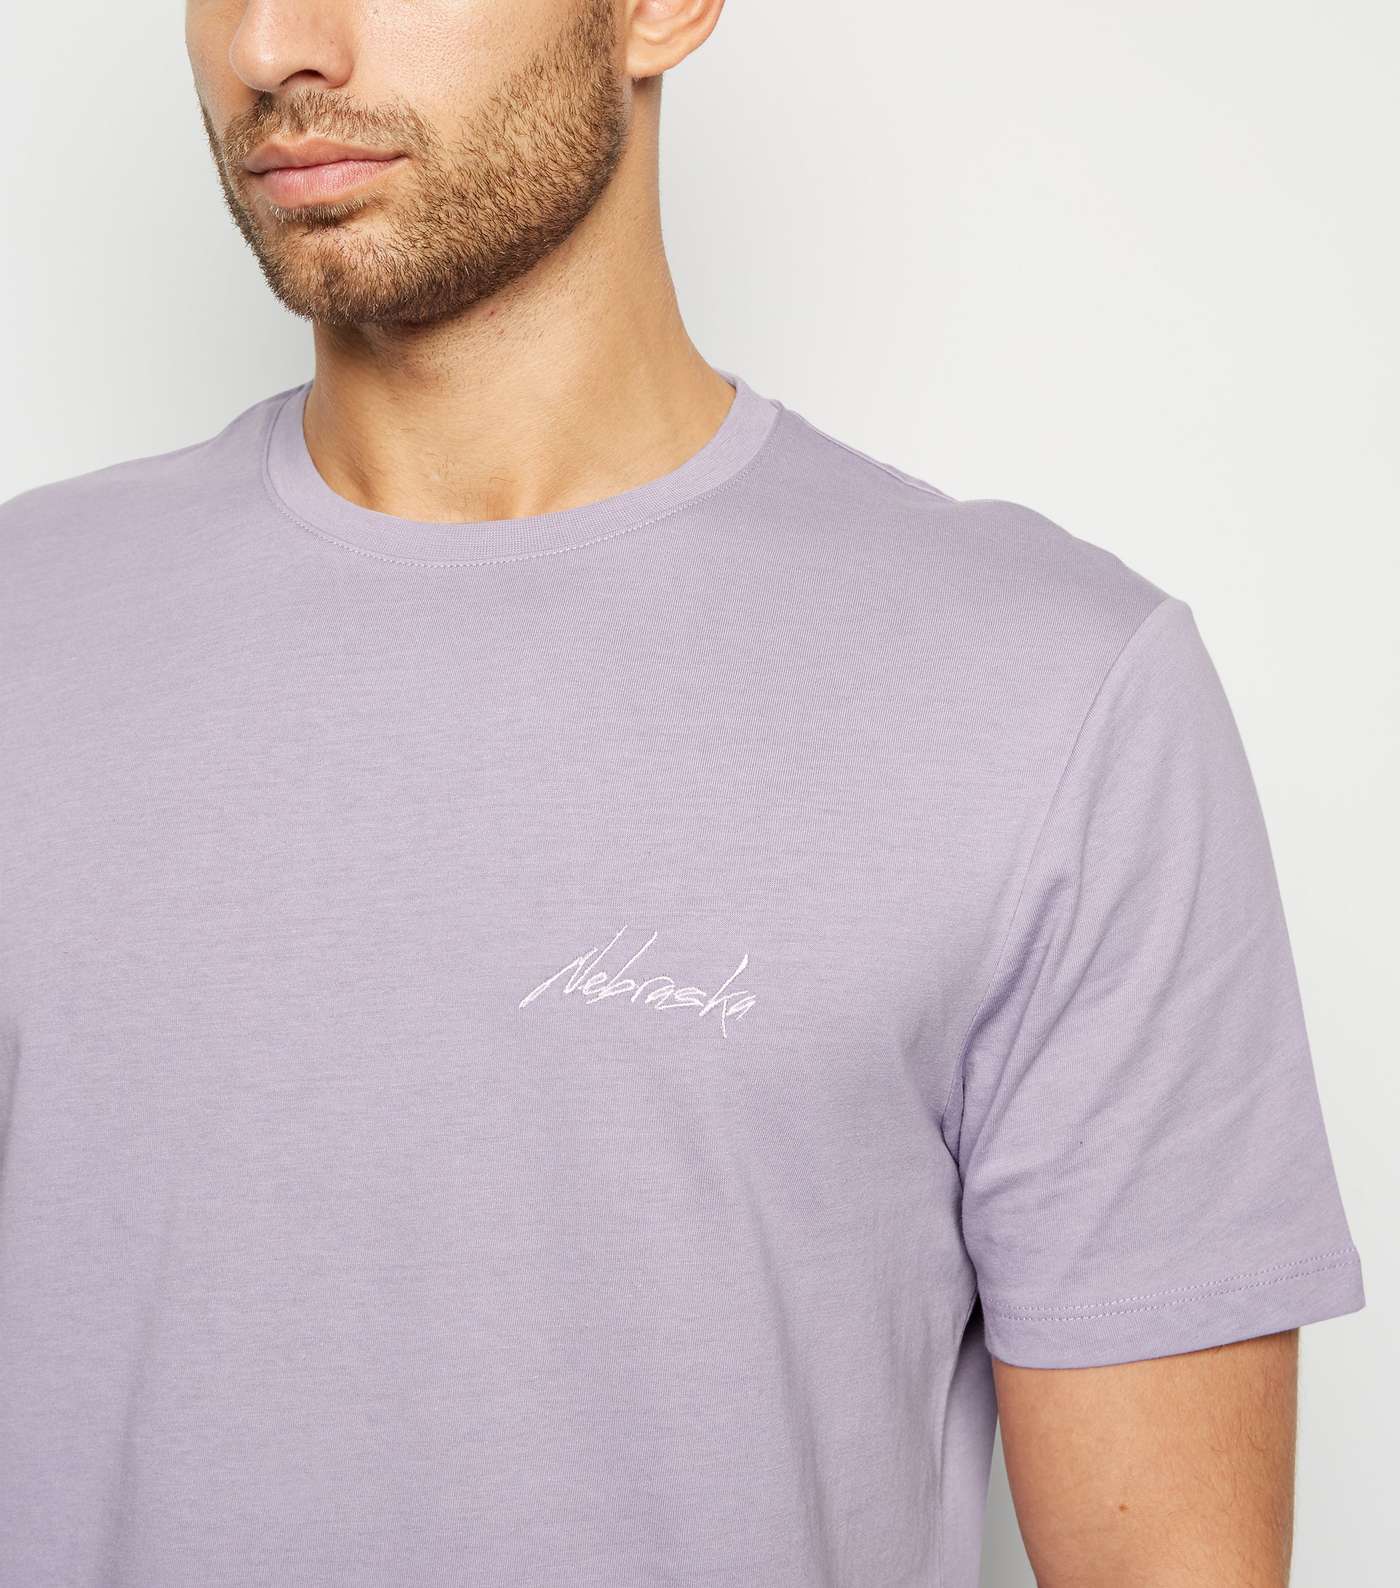 Lilac Nebraska Embroidered Slogan T-Shirt Image 5